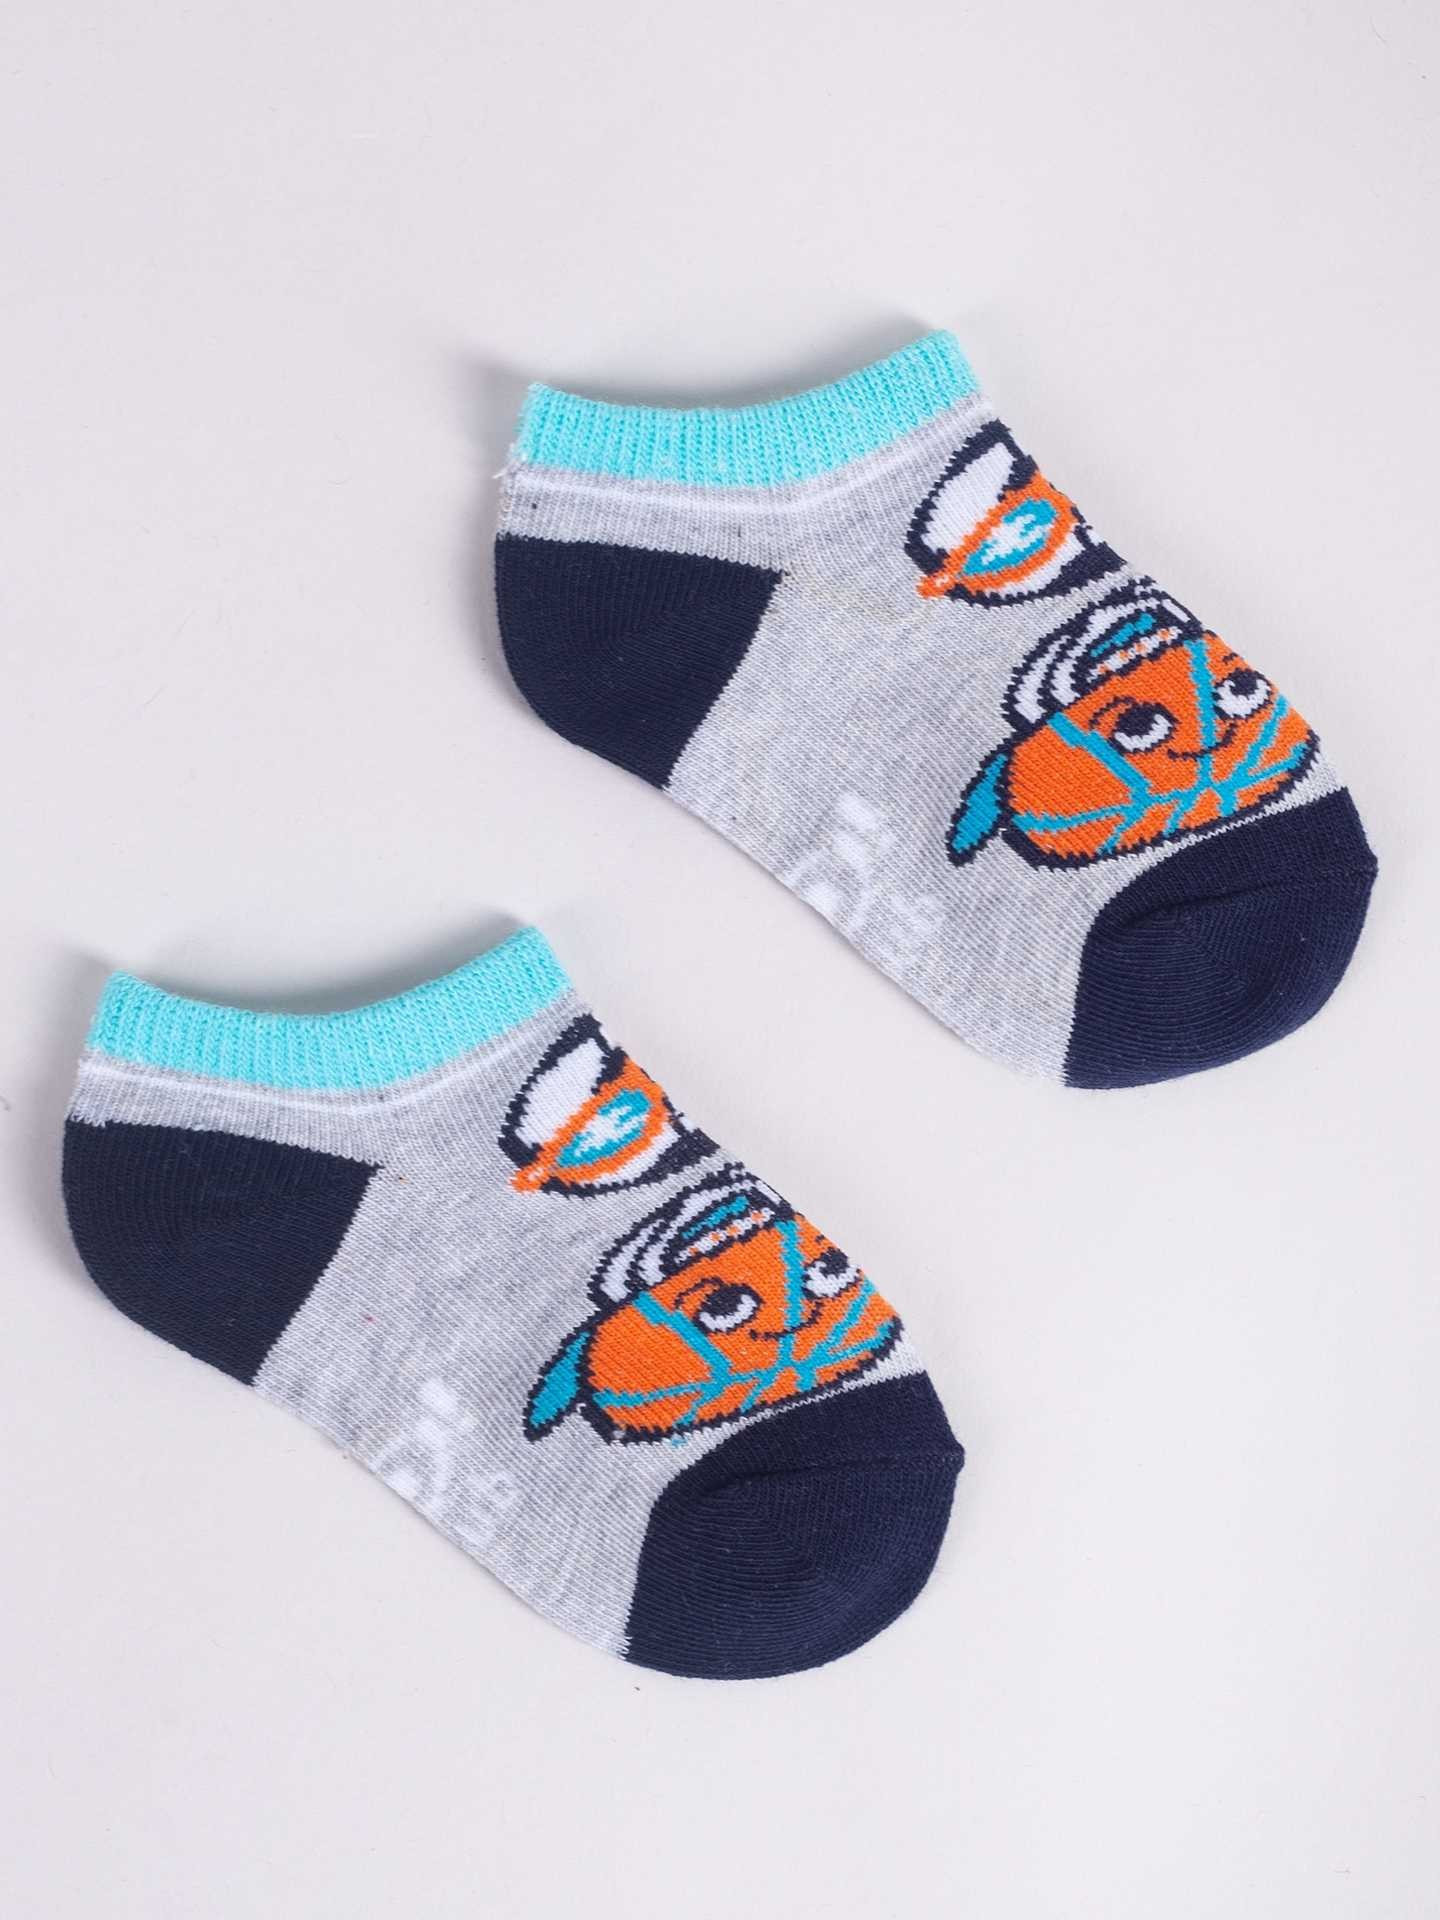 Yoclub Chlapecké kotníkové bavlněné ponožky Vzory Barvy 6-Pack SKS-0008C-AA00-003 Multicolour 27-30